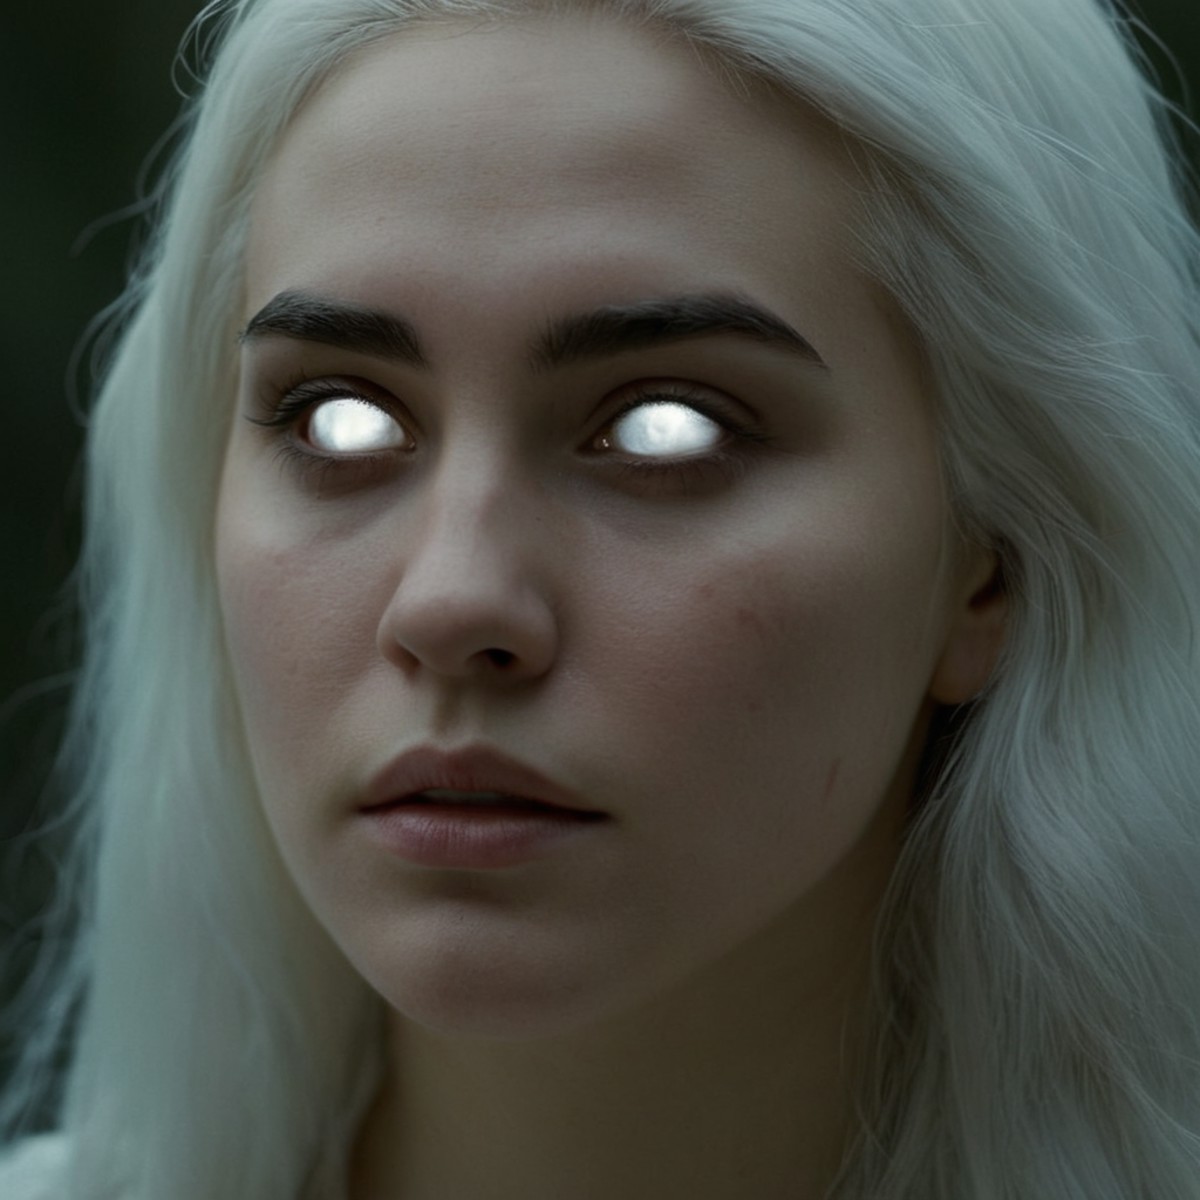 cinematic film still of  <lora:white sclera v2:1> glowing white sclera iris eyes
a white eyes woman with long white hair a...